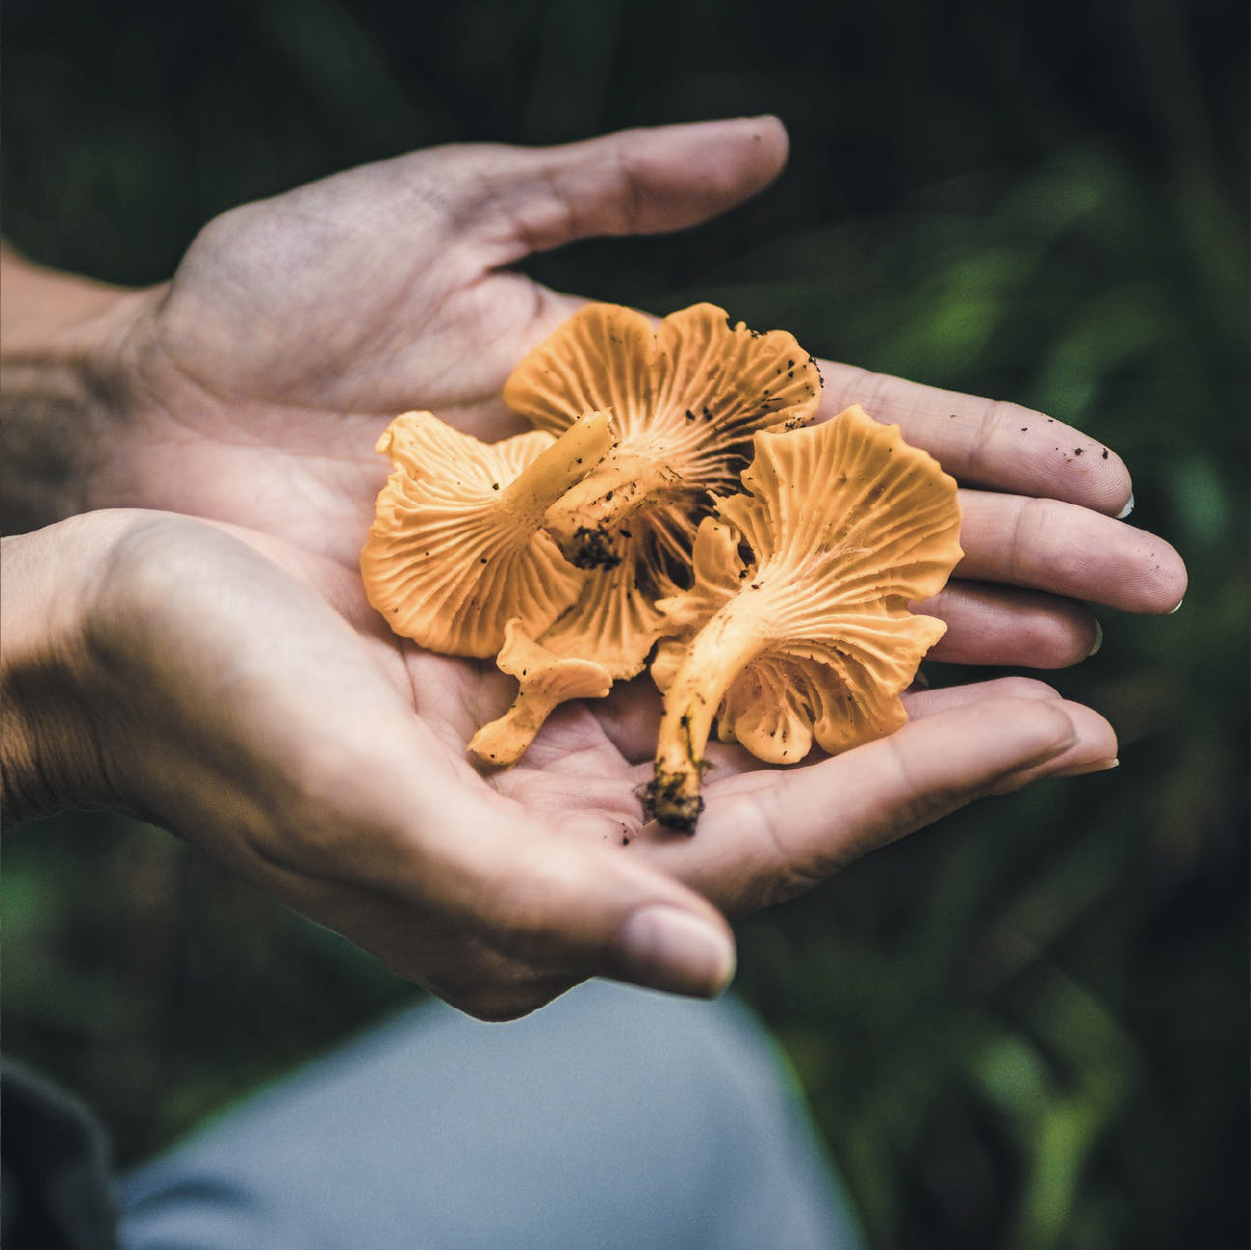 Top 5 Beginner Wild Mushrooms